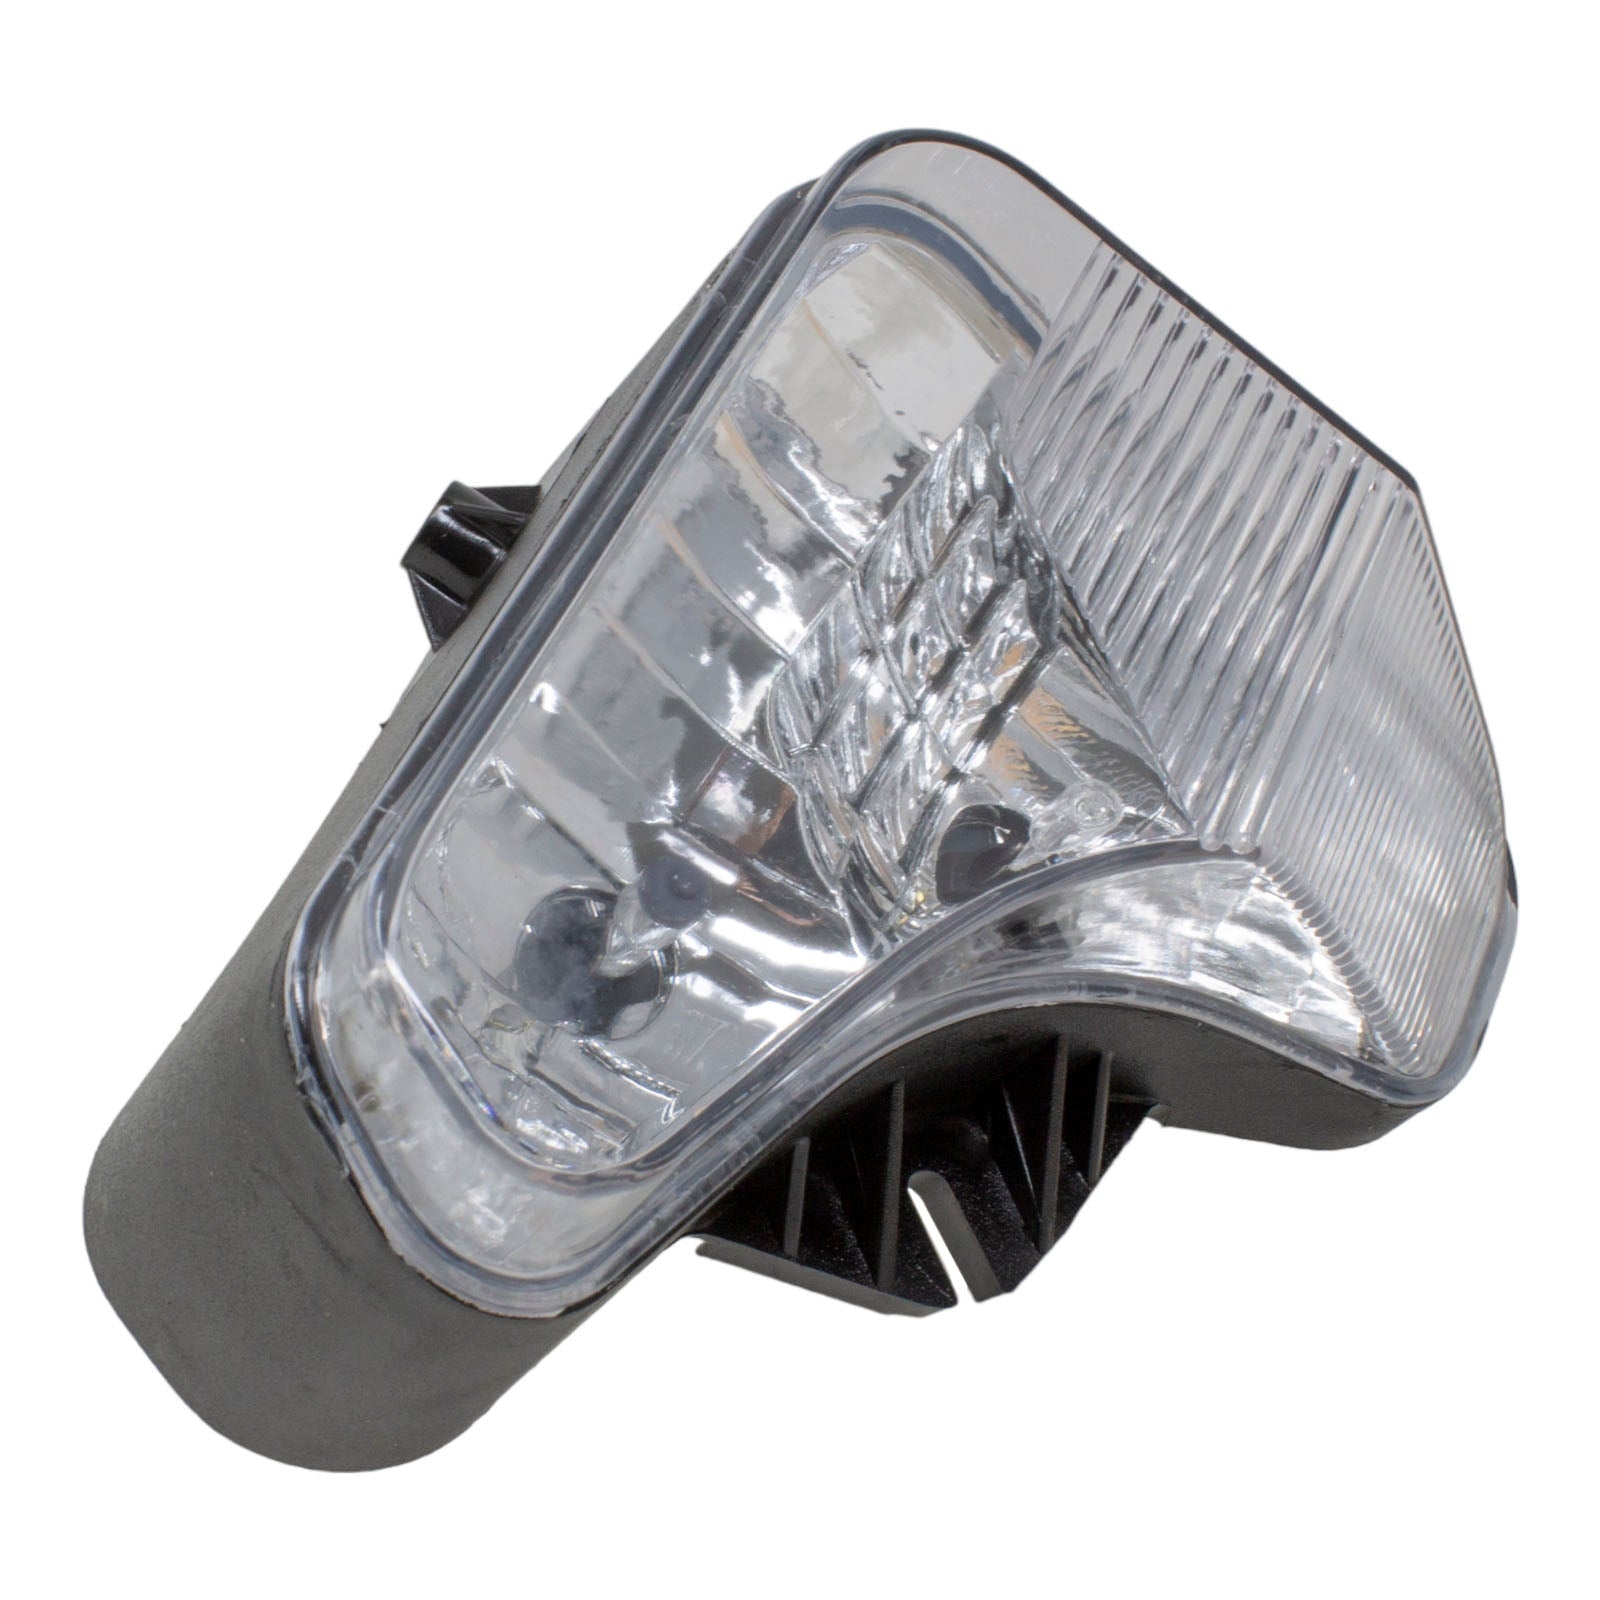 Duraforce 7251340 7251341, Left & Right Headlight Assembly For Bobcat